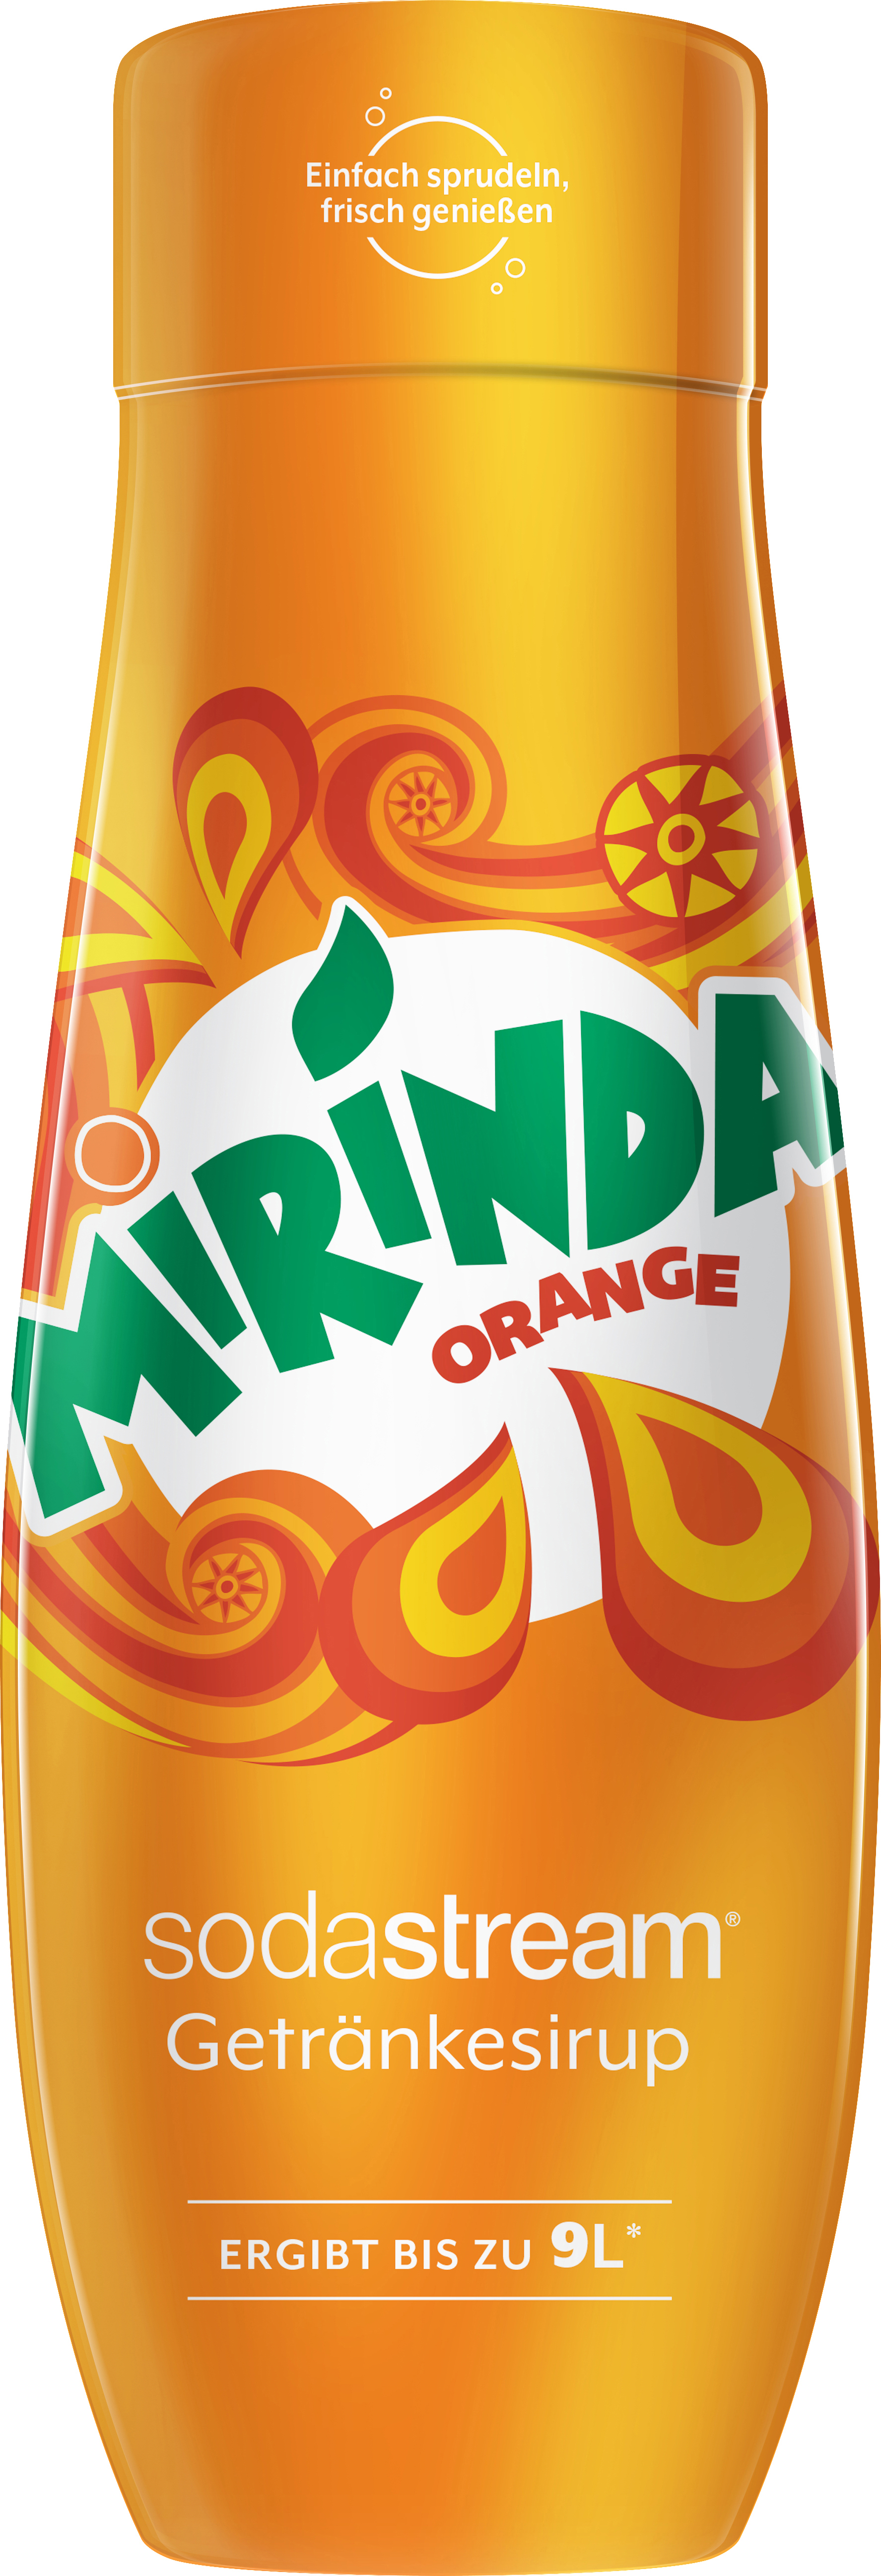 MIRINDA Orange SODASTREAM Sirup 1924204490 SST